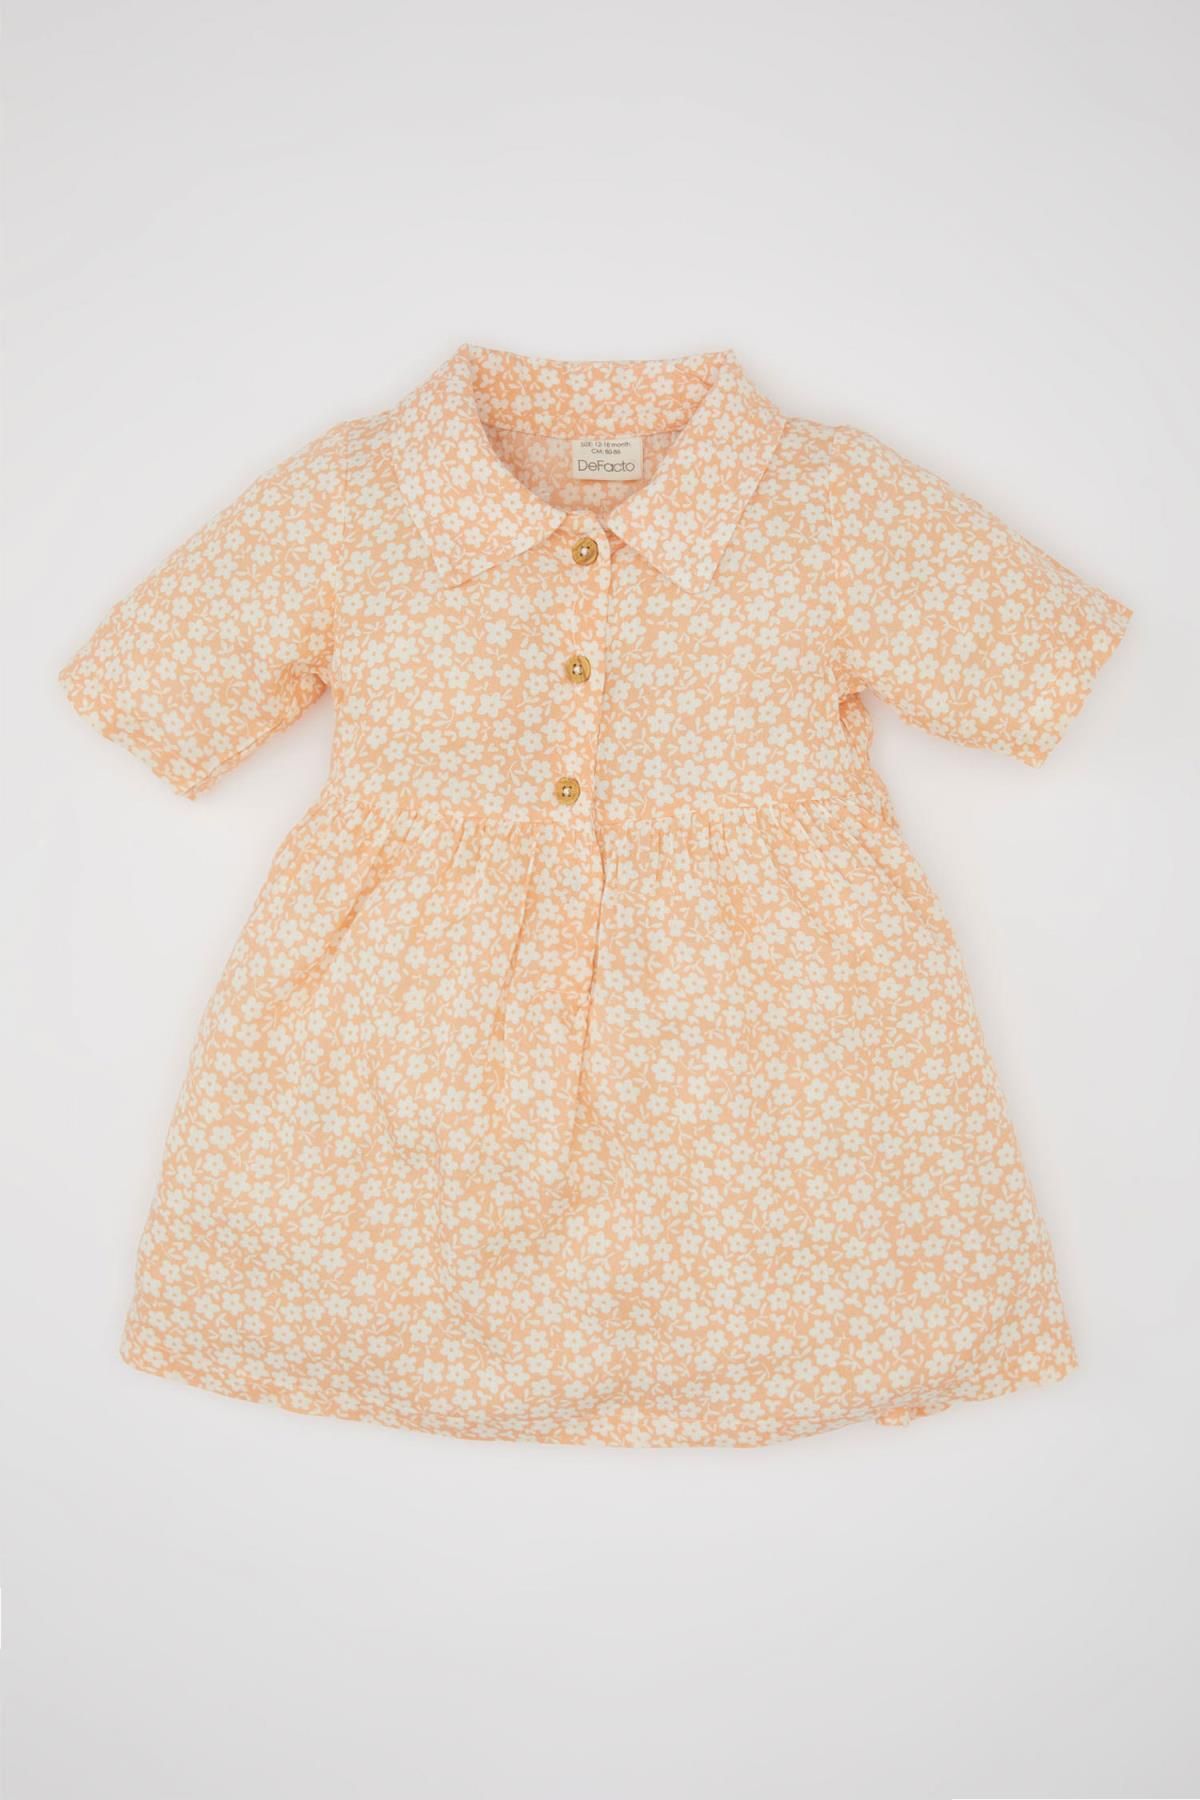 Defacto Kız Bebek Çiçekli Kısa Kollu Krinkıl Viskon Elbise C4535A524SM